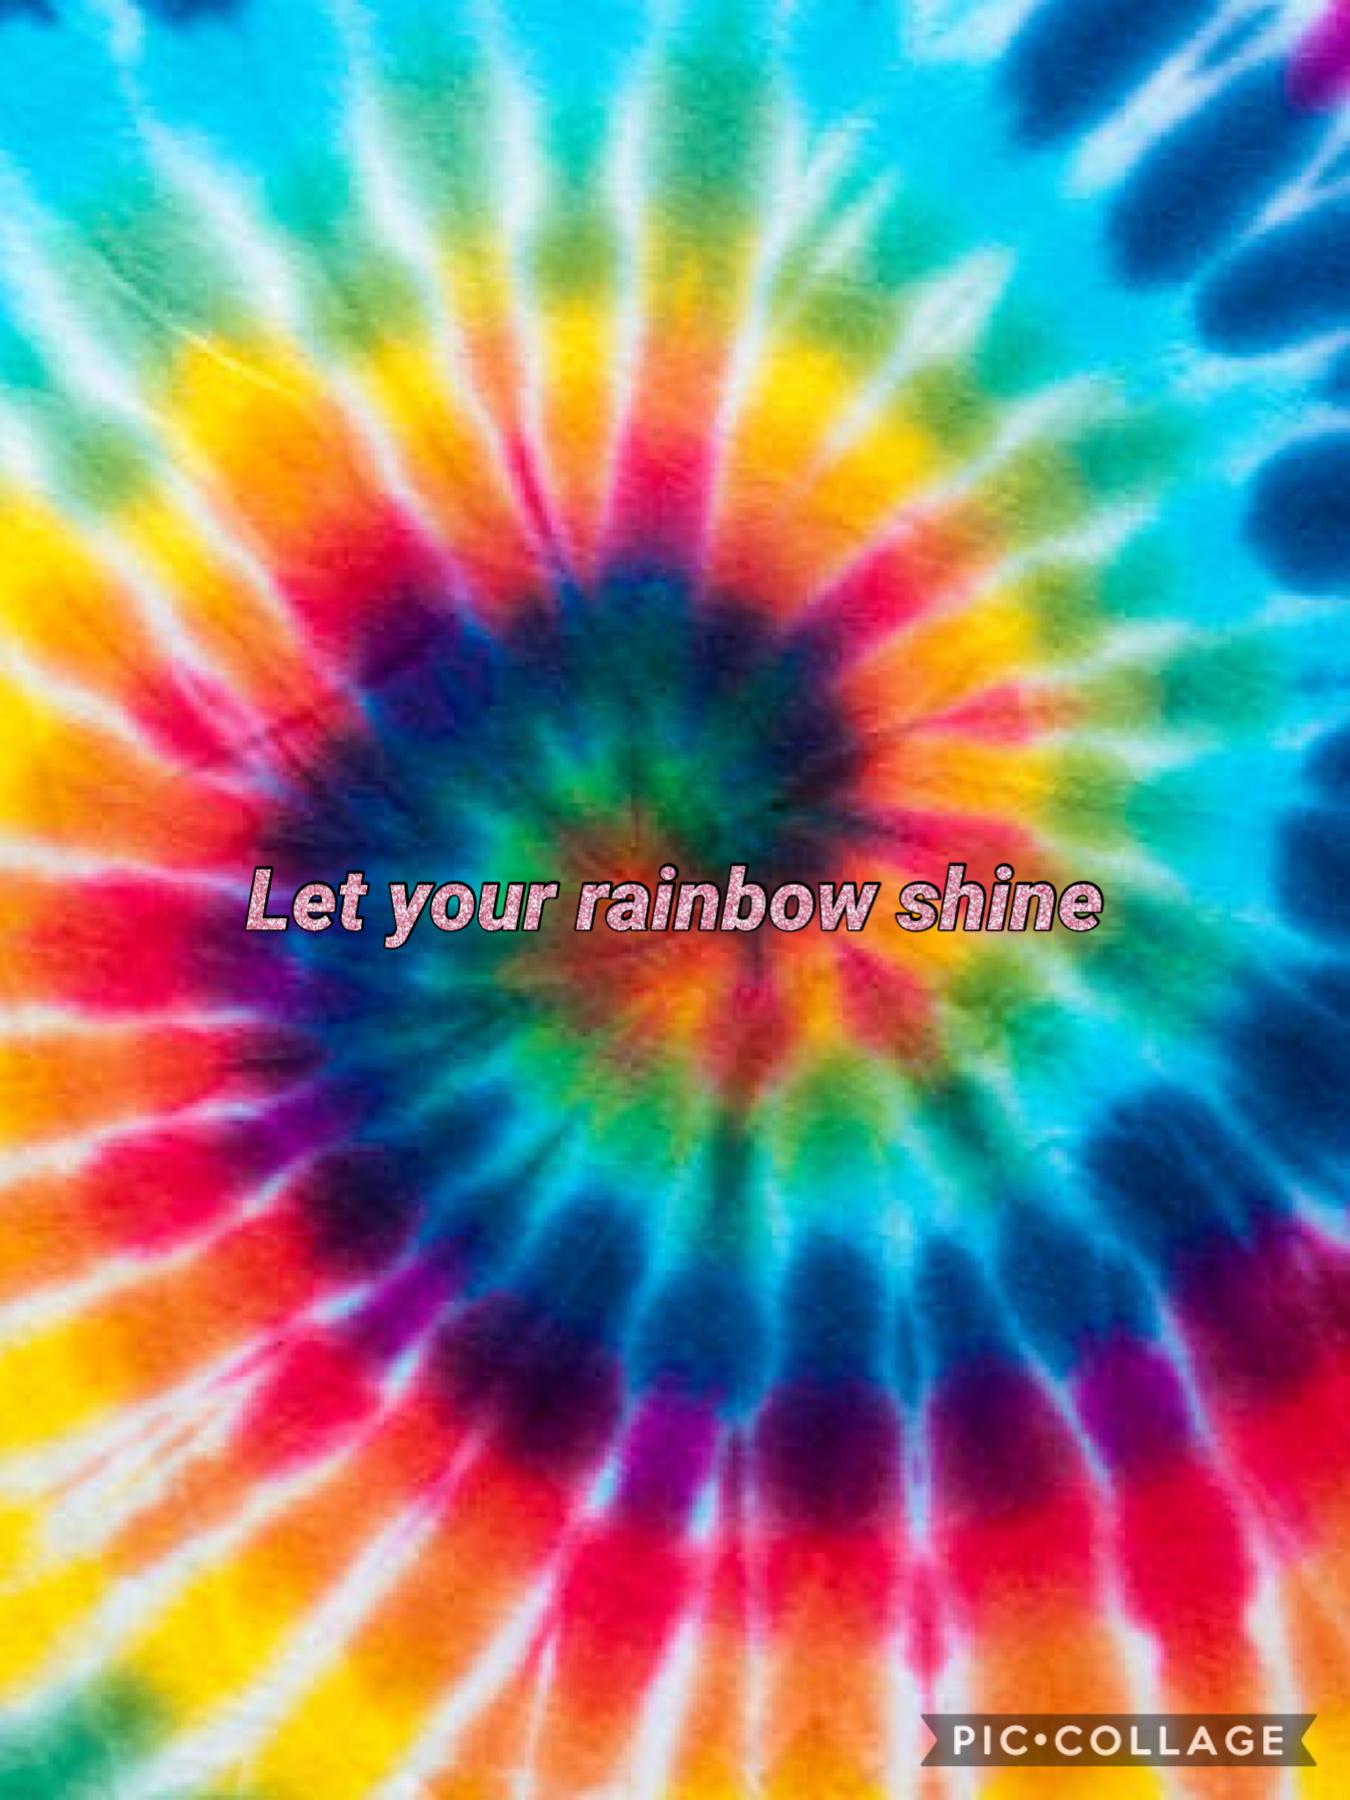 Let ur rainbow shine 🌈 